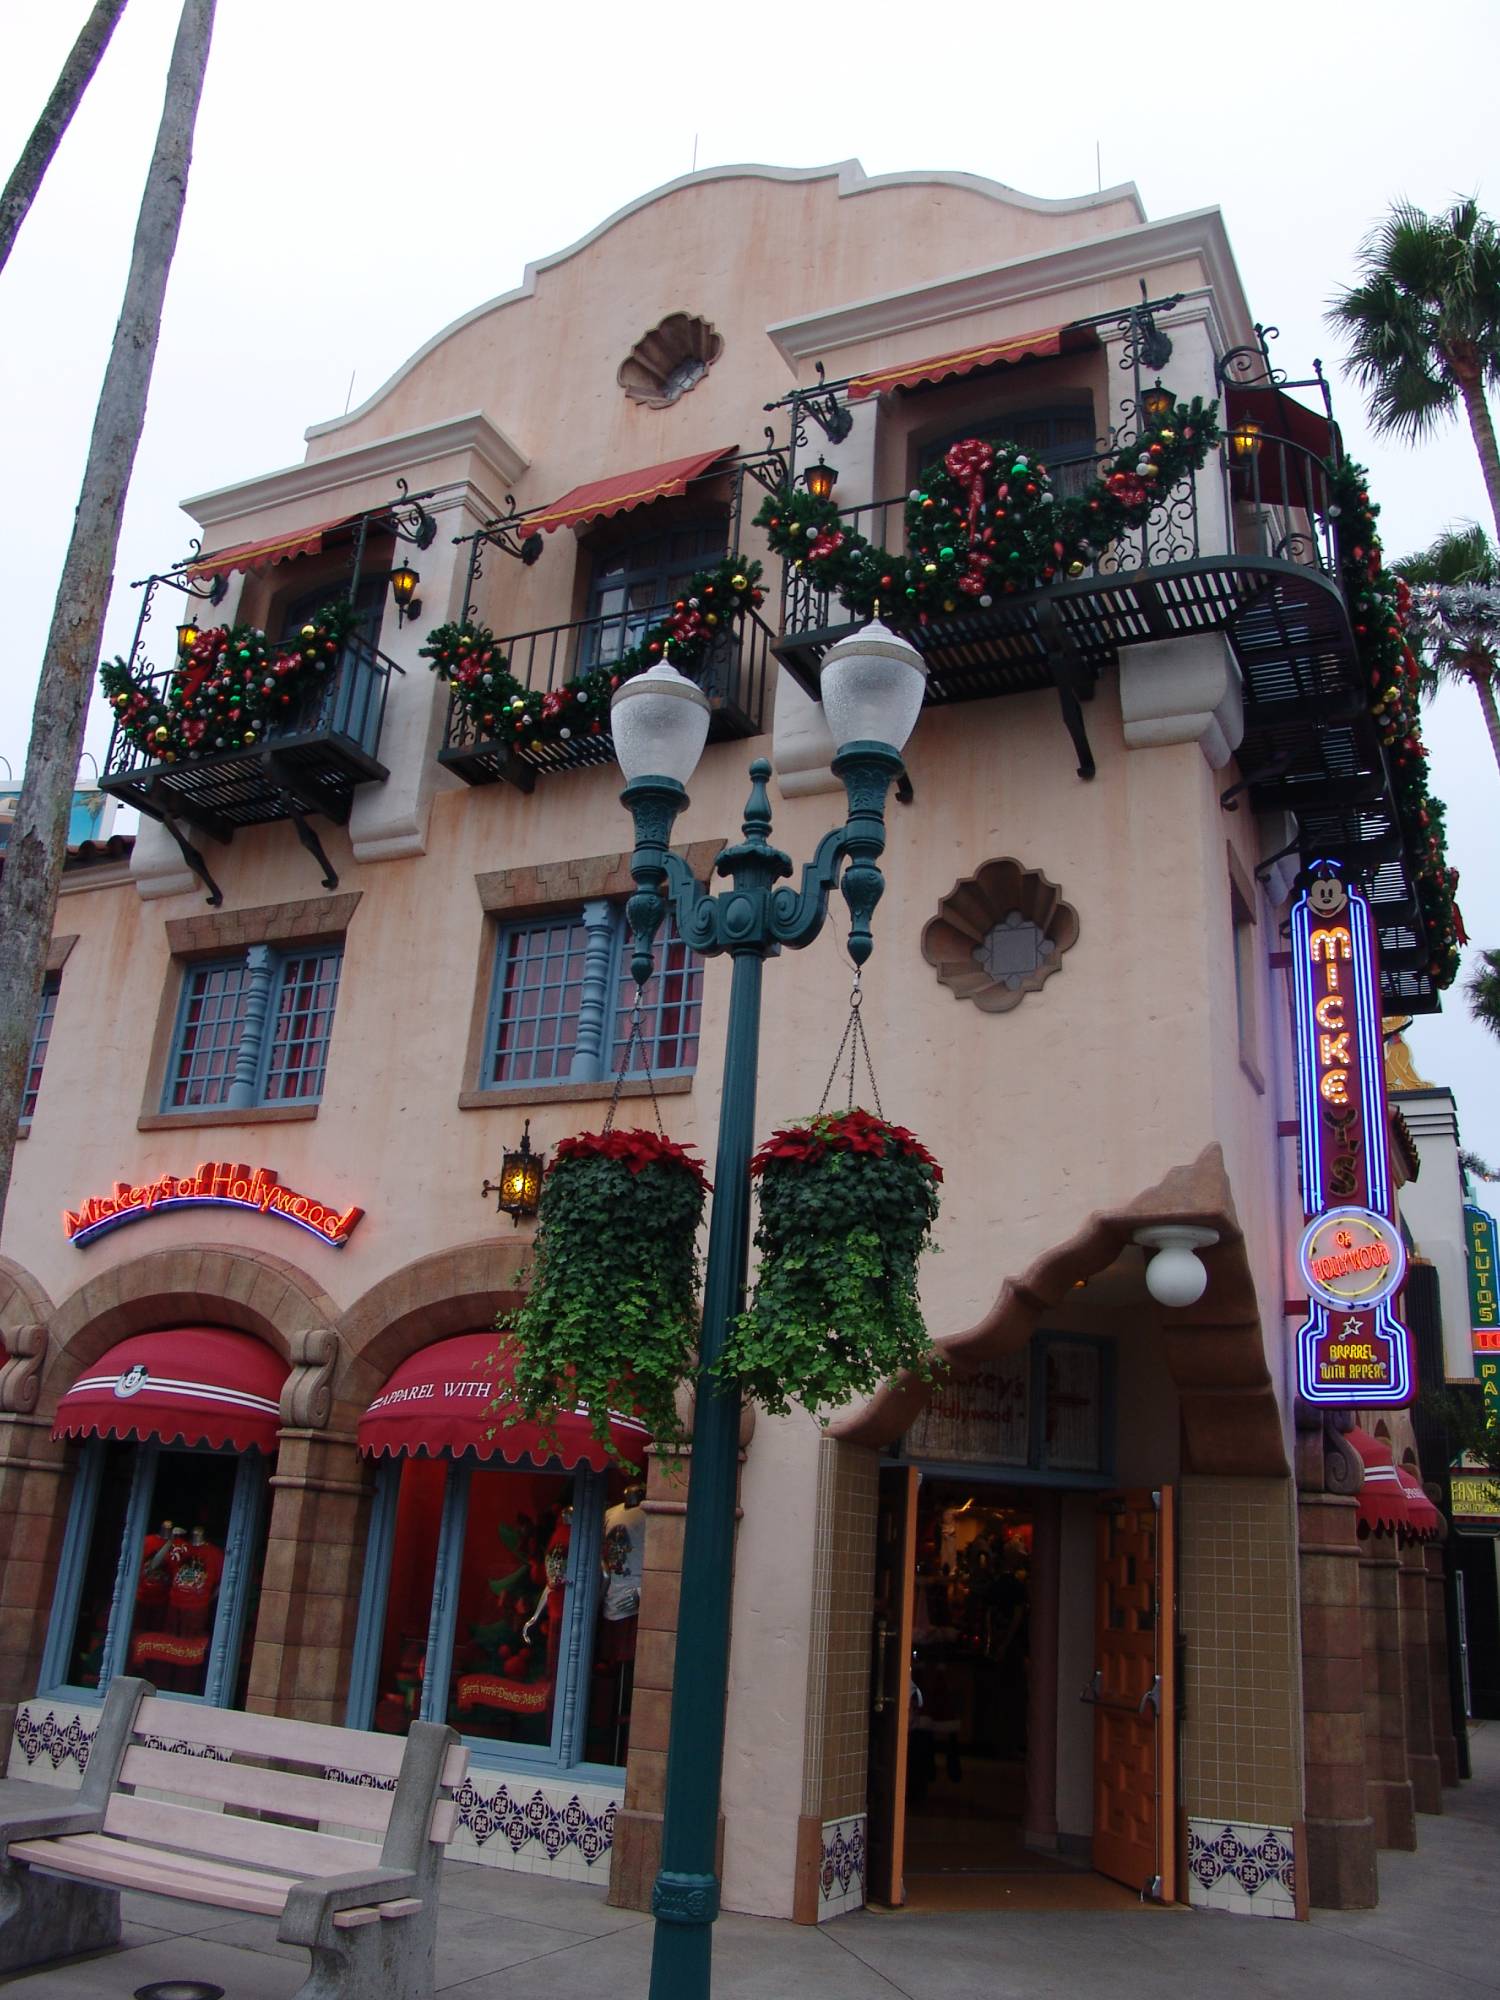 Disney's Hollywood Studios - Hollywood Boulevard shops